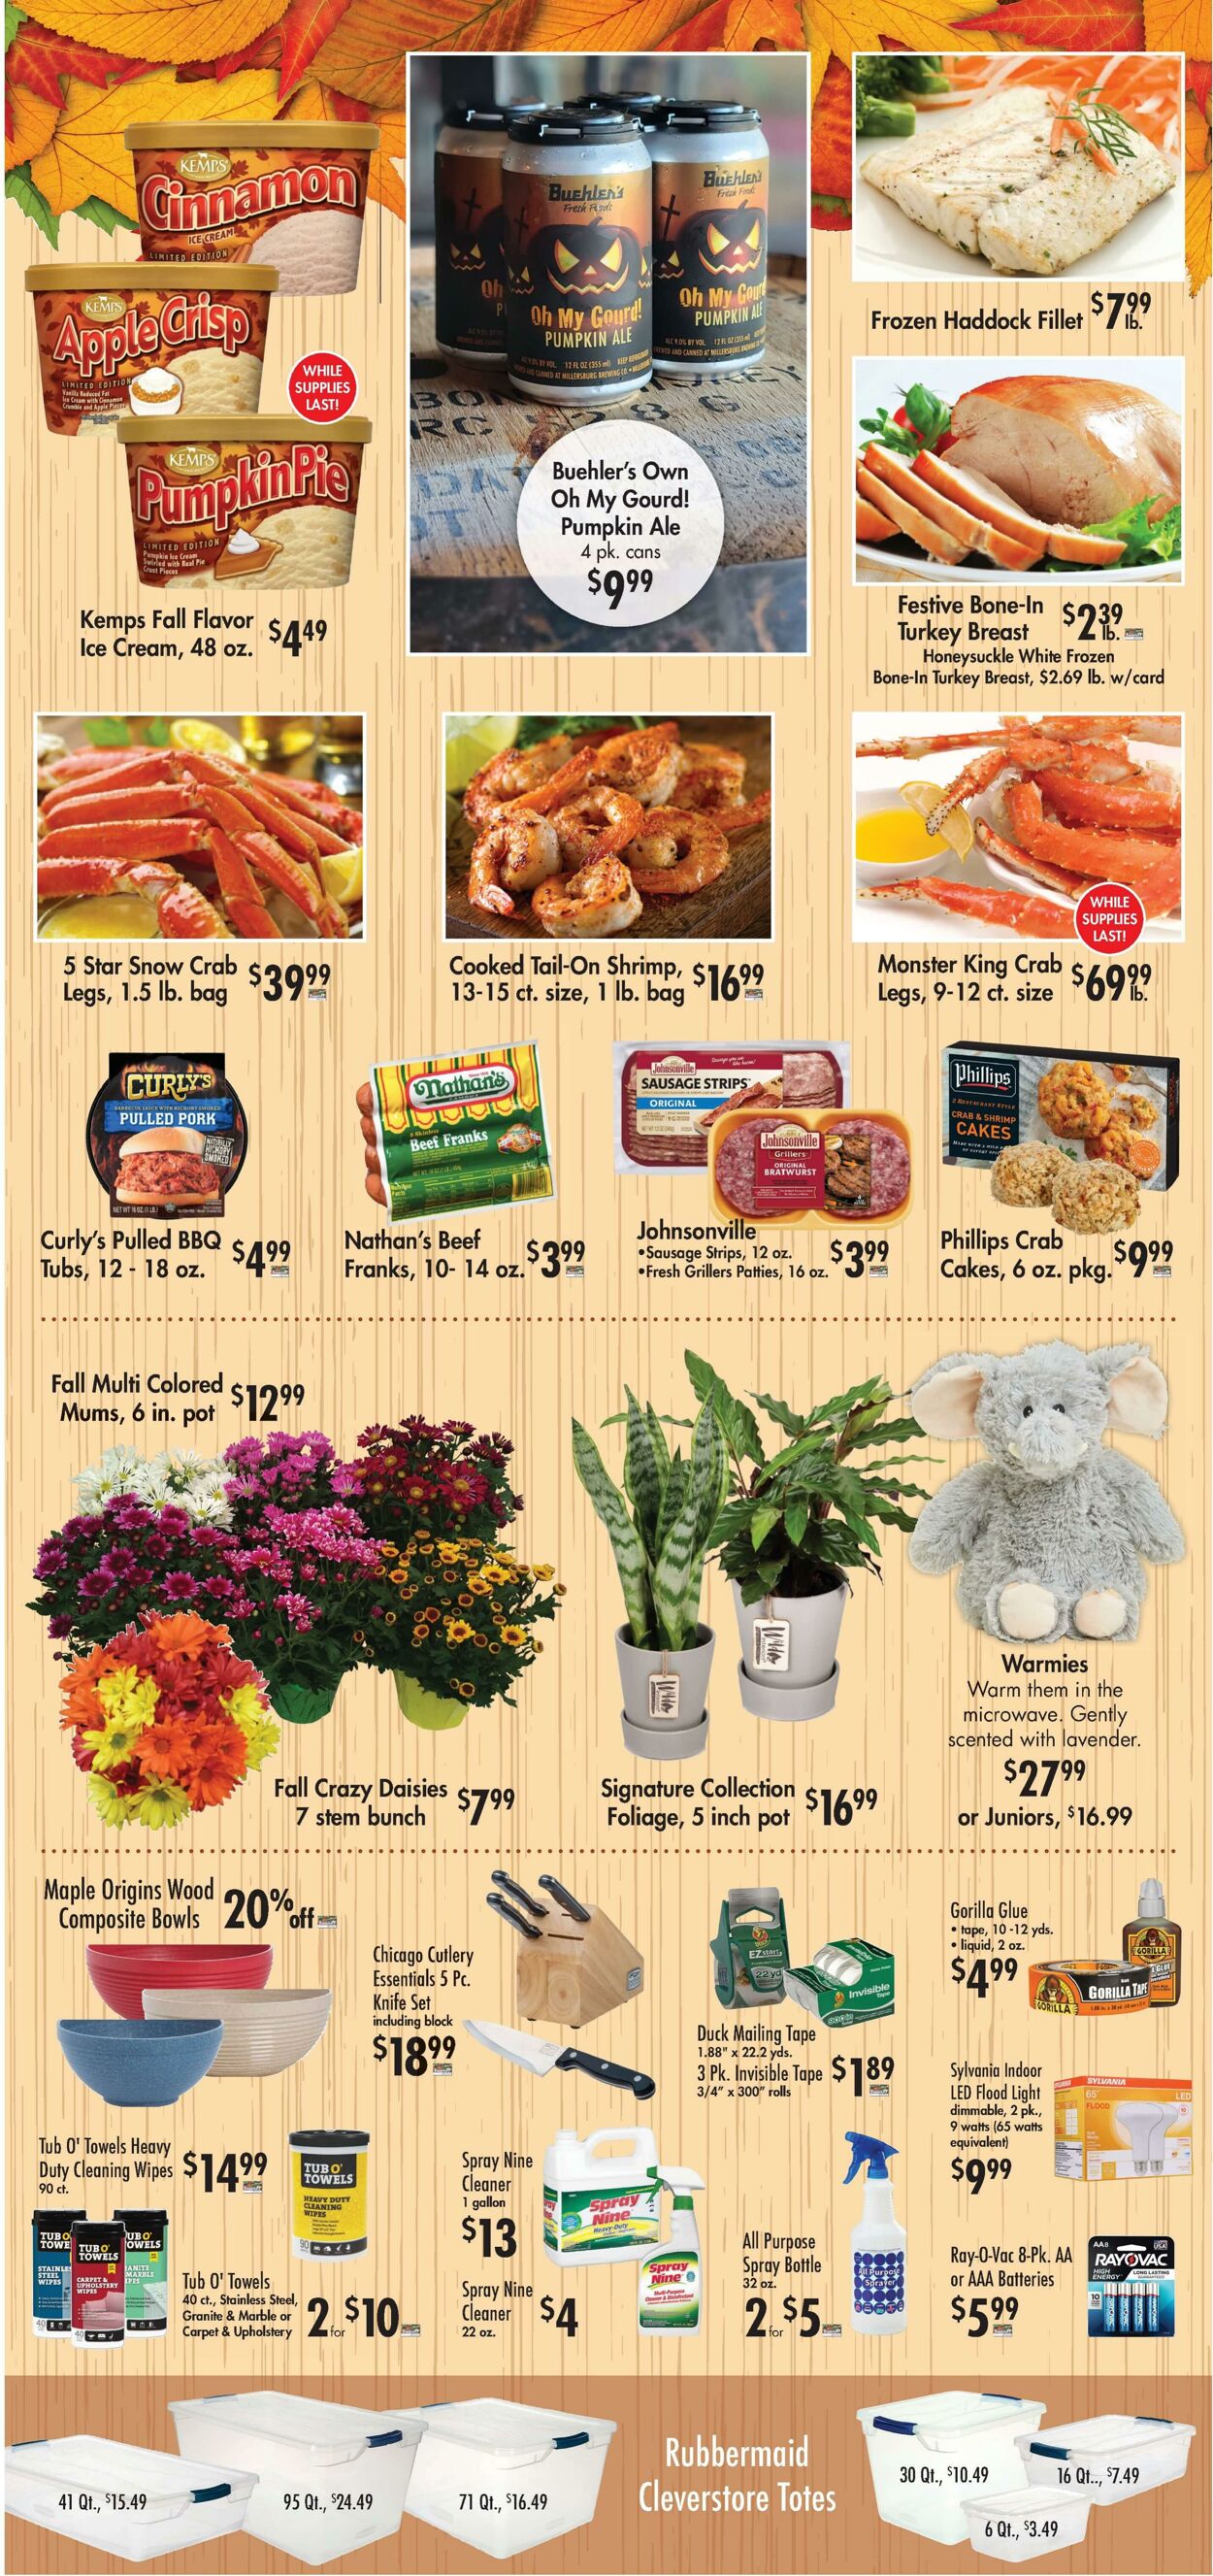 Weekly ad Buehler's Fresh Food 09/28/2022 - 10/04/2022